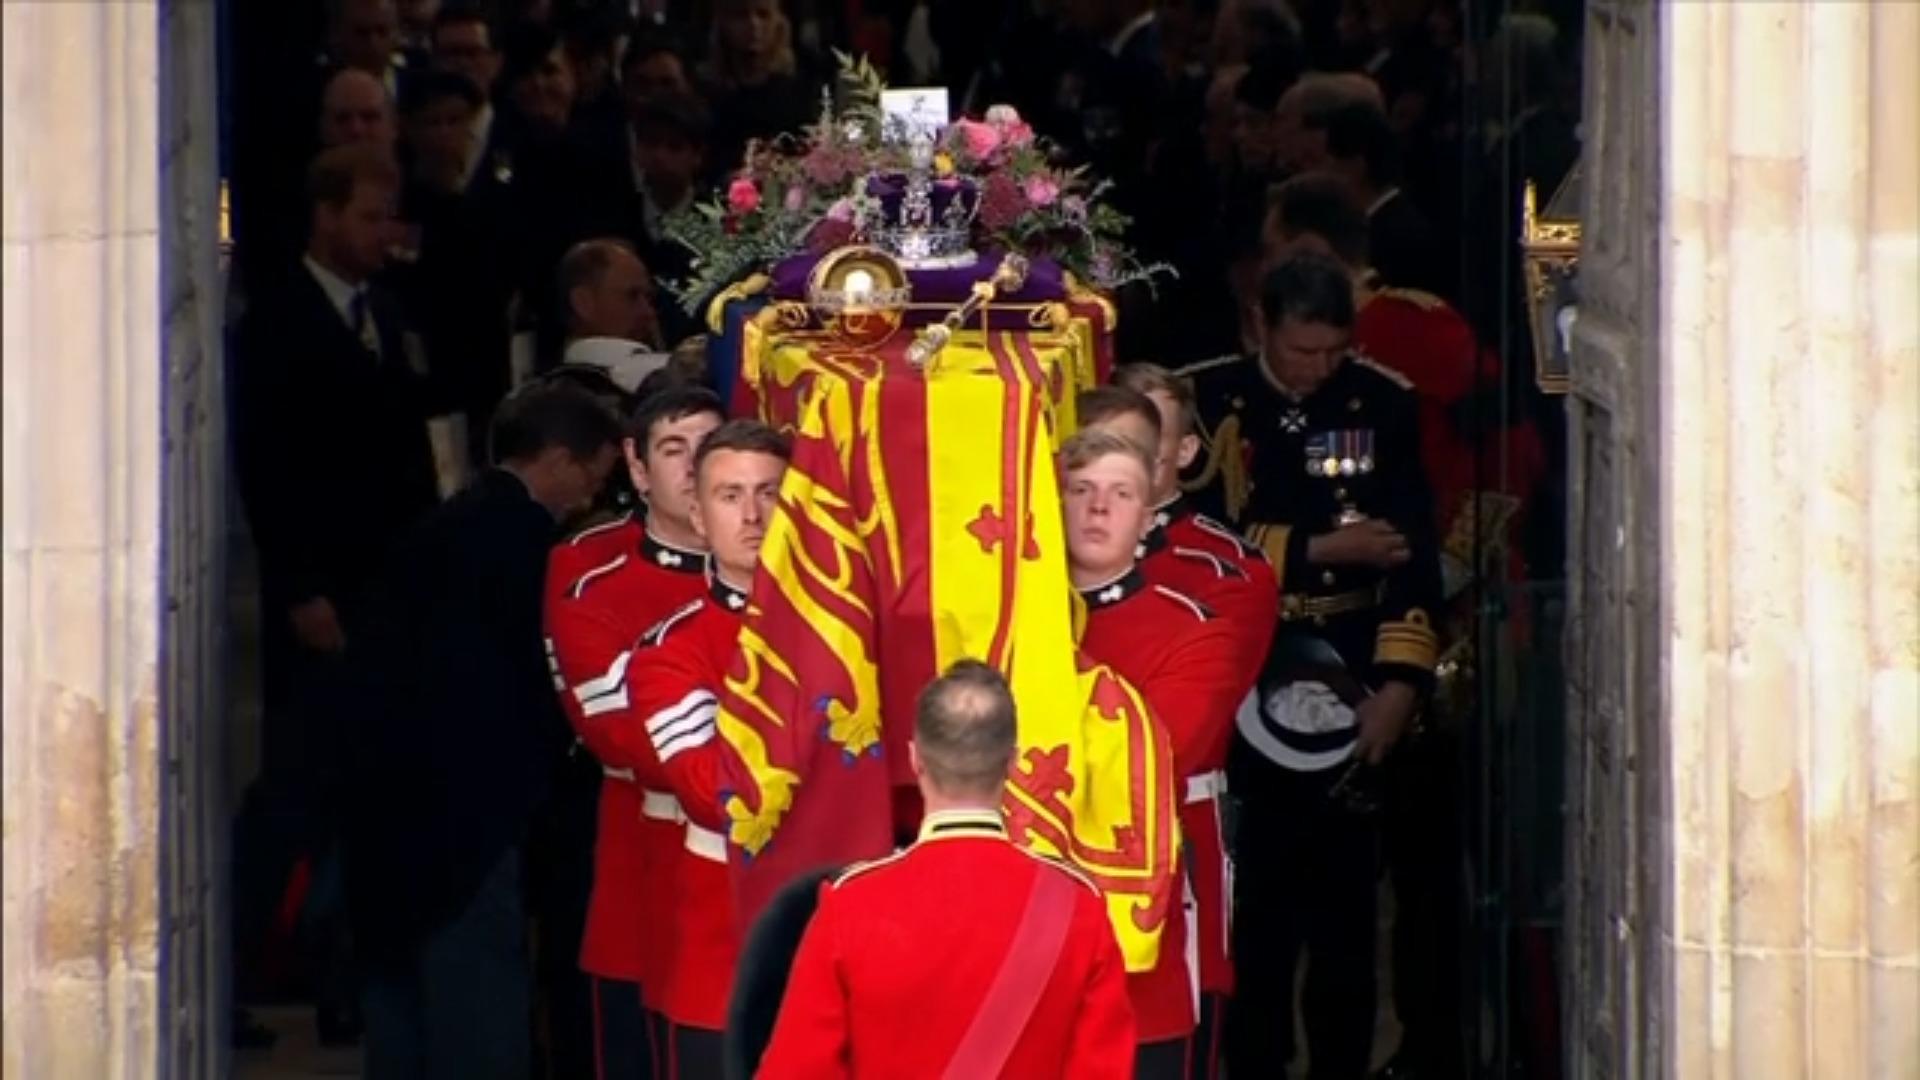 The Queen's coffin was taken to Wellington Arch The Queen's last journey